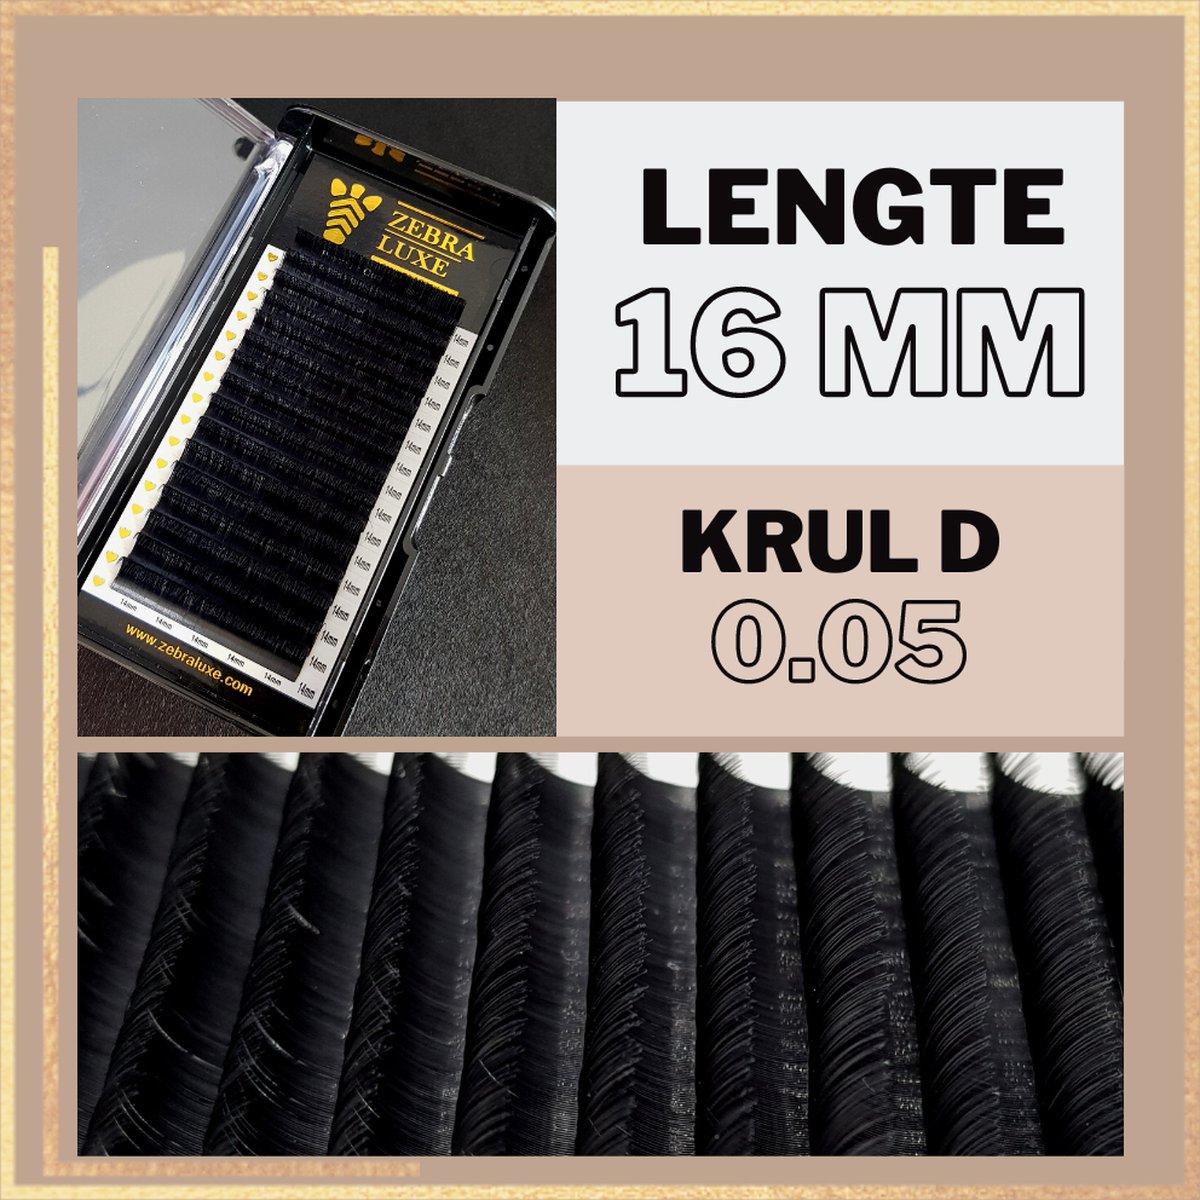 Wimpers Zebra Luxe - D Krul – Dikte 0.05 – Lengte 16 mm – 16 rijen in een tray - nepwimpers - Volume - wimperextensions - Russian volume - D crul